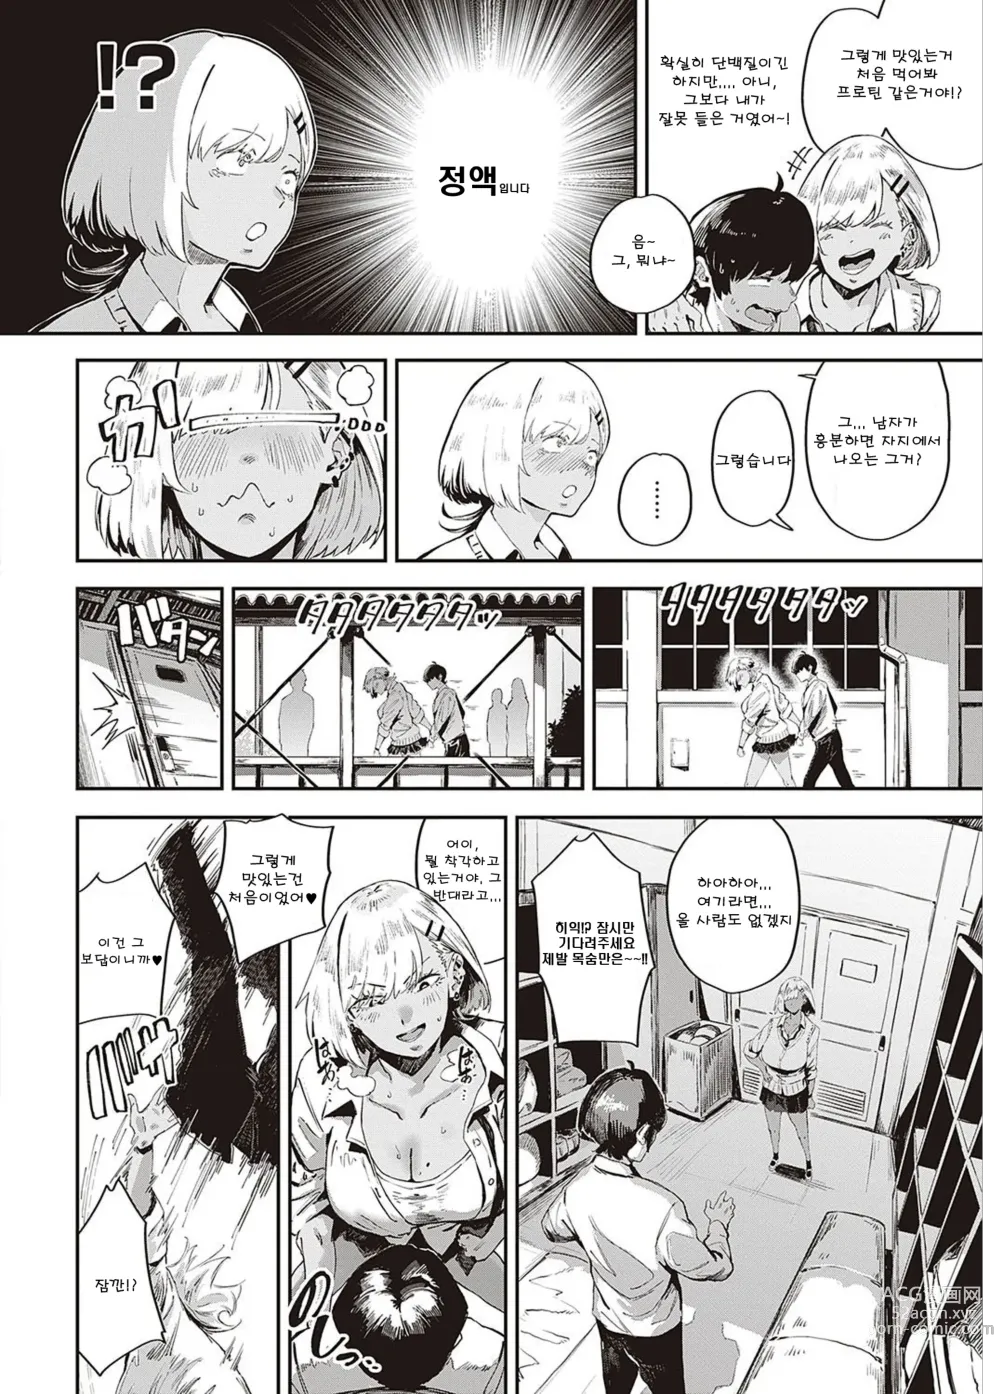 Page 8 of manga Nagisa no in-gaeshi